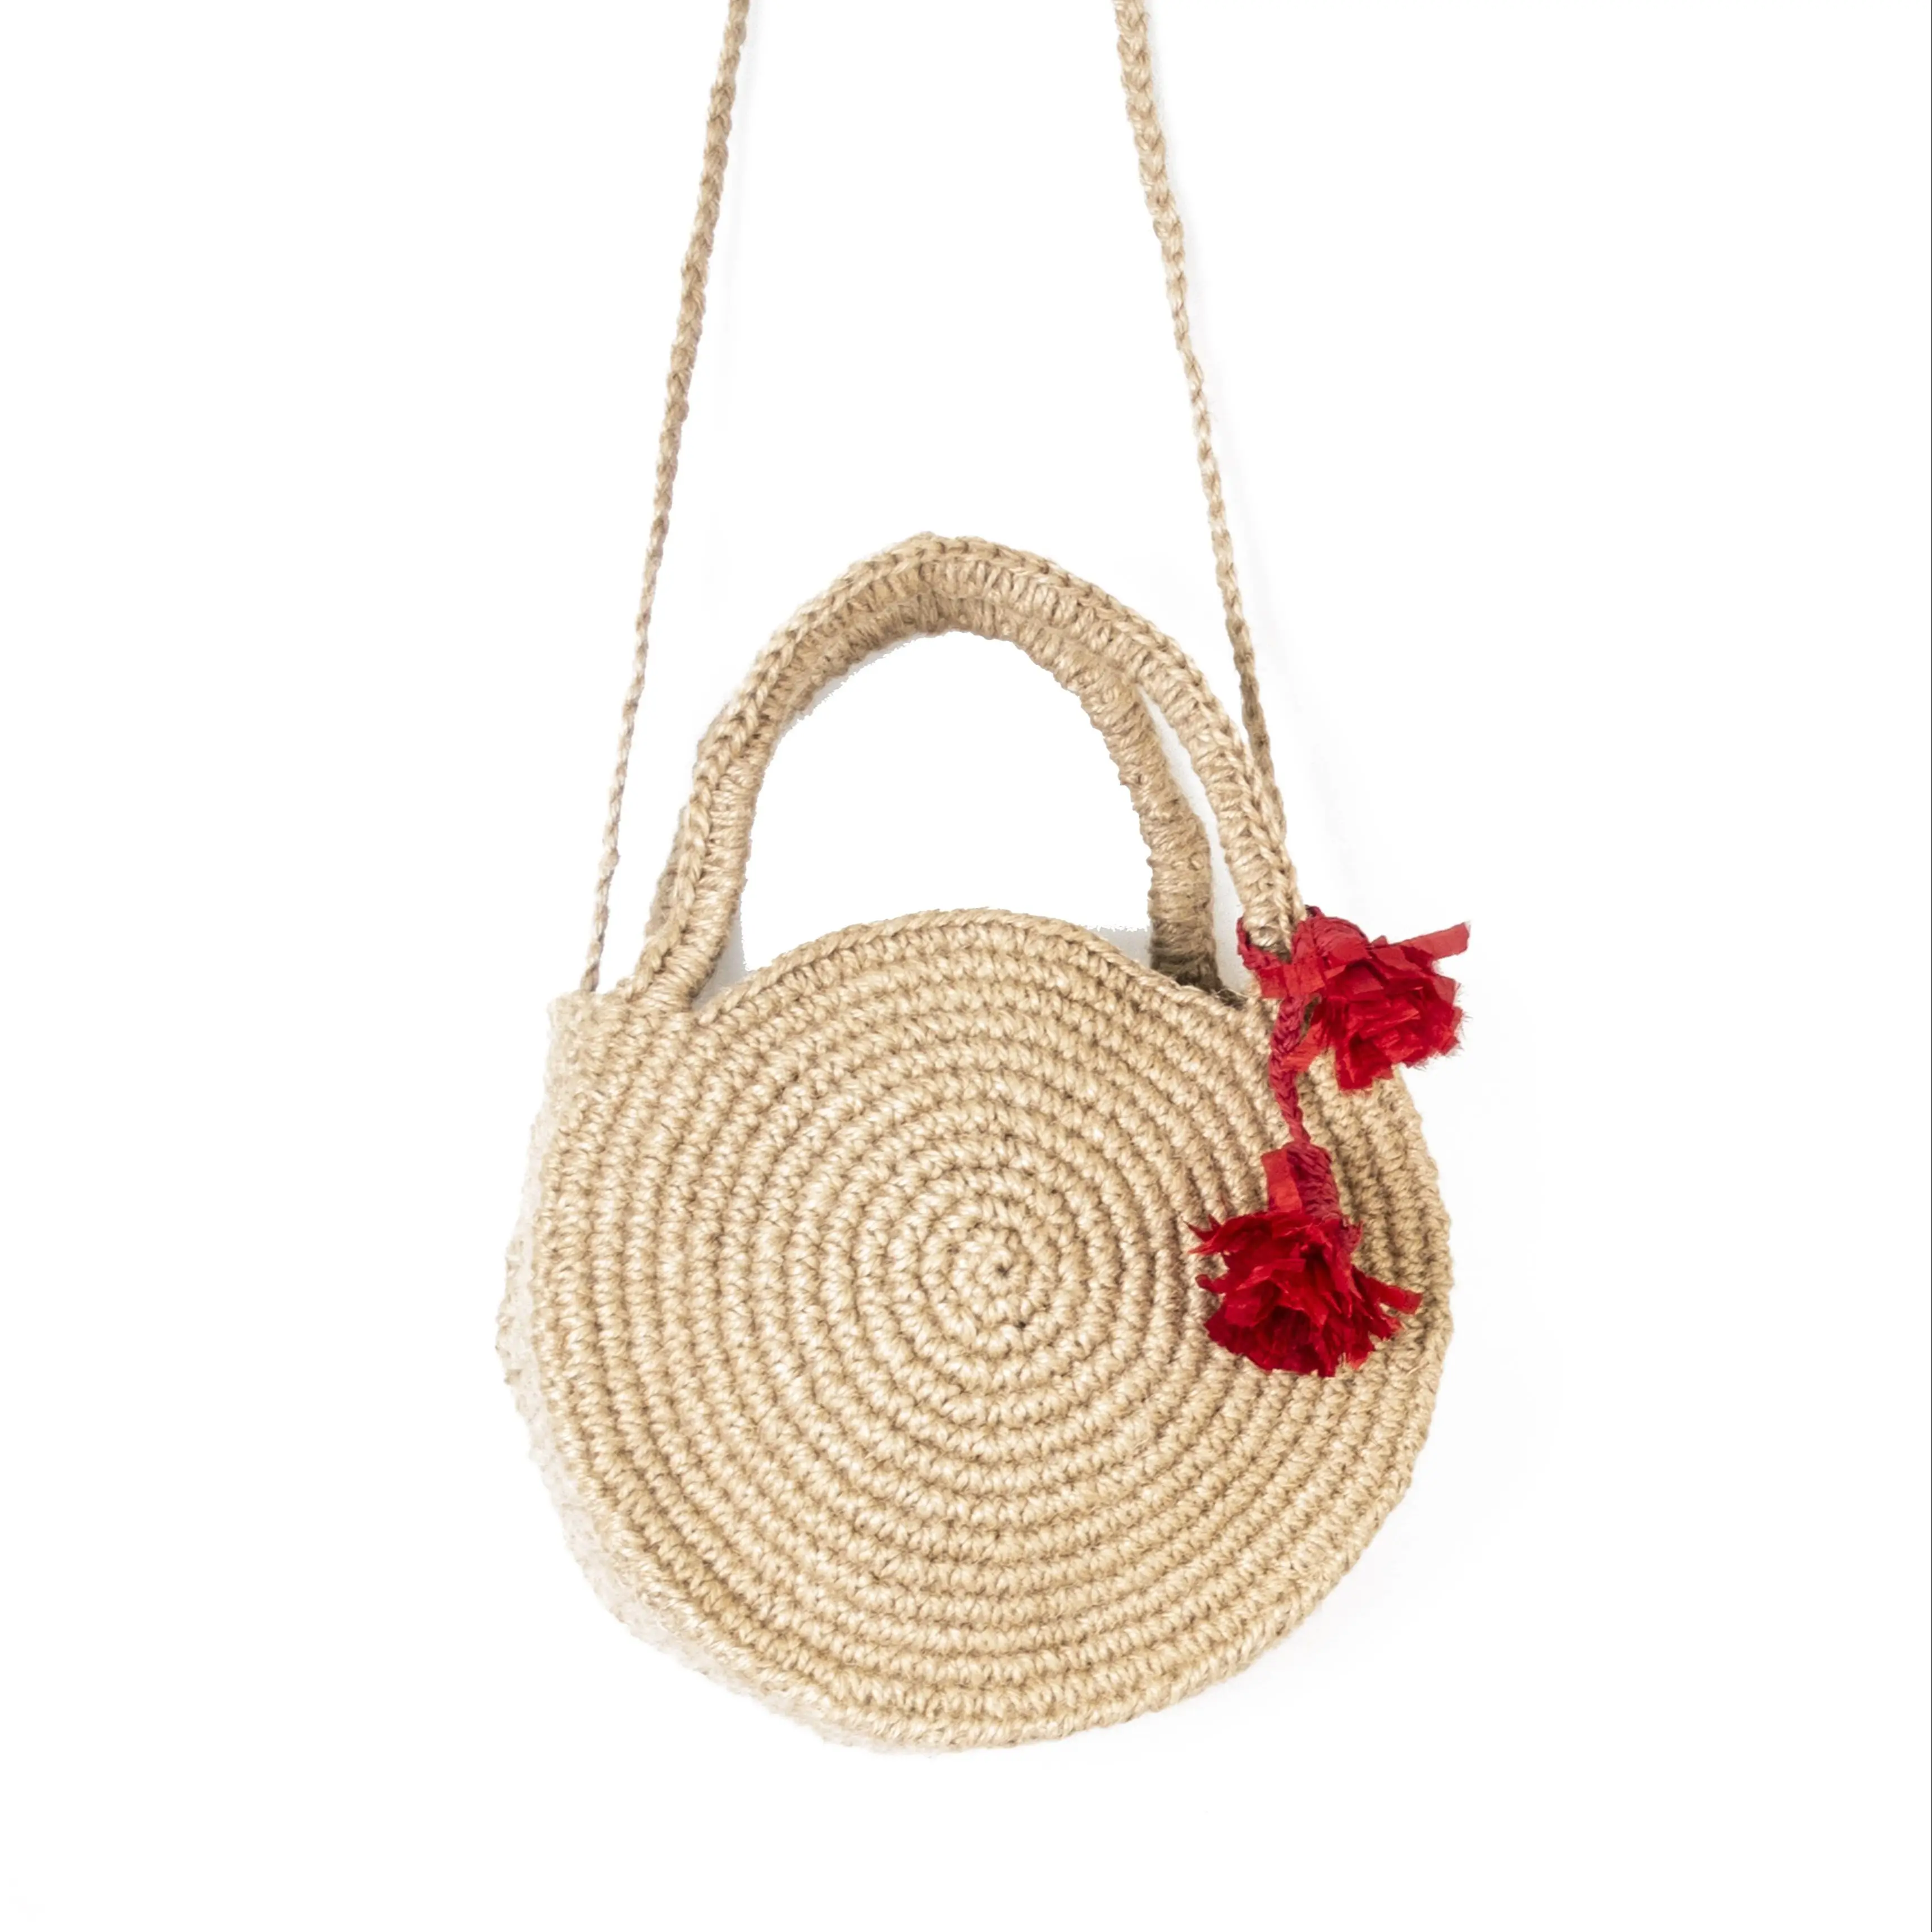 Flower Detailed Straw Women Bags Jute Handmade Summer Beach Bag Woven Ladies Round Bag bags for women 2021 Made in turkey